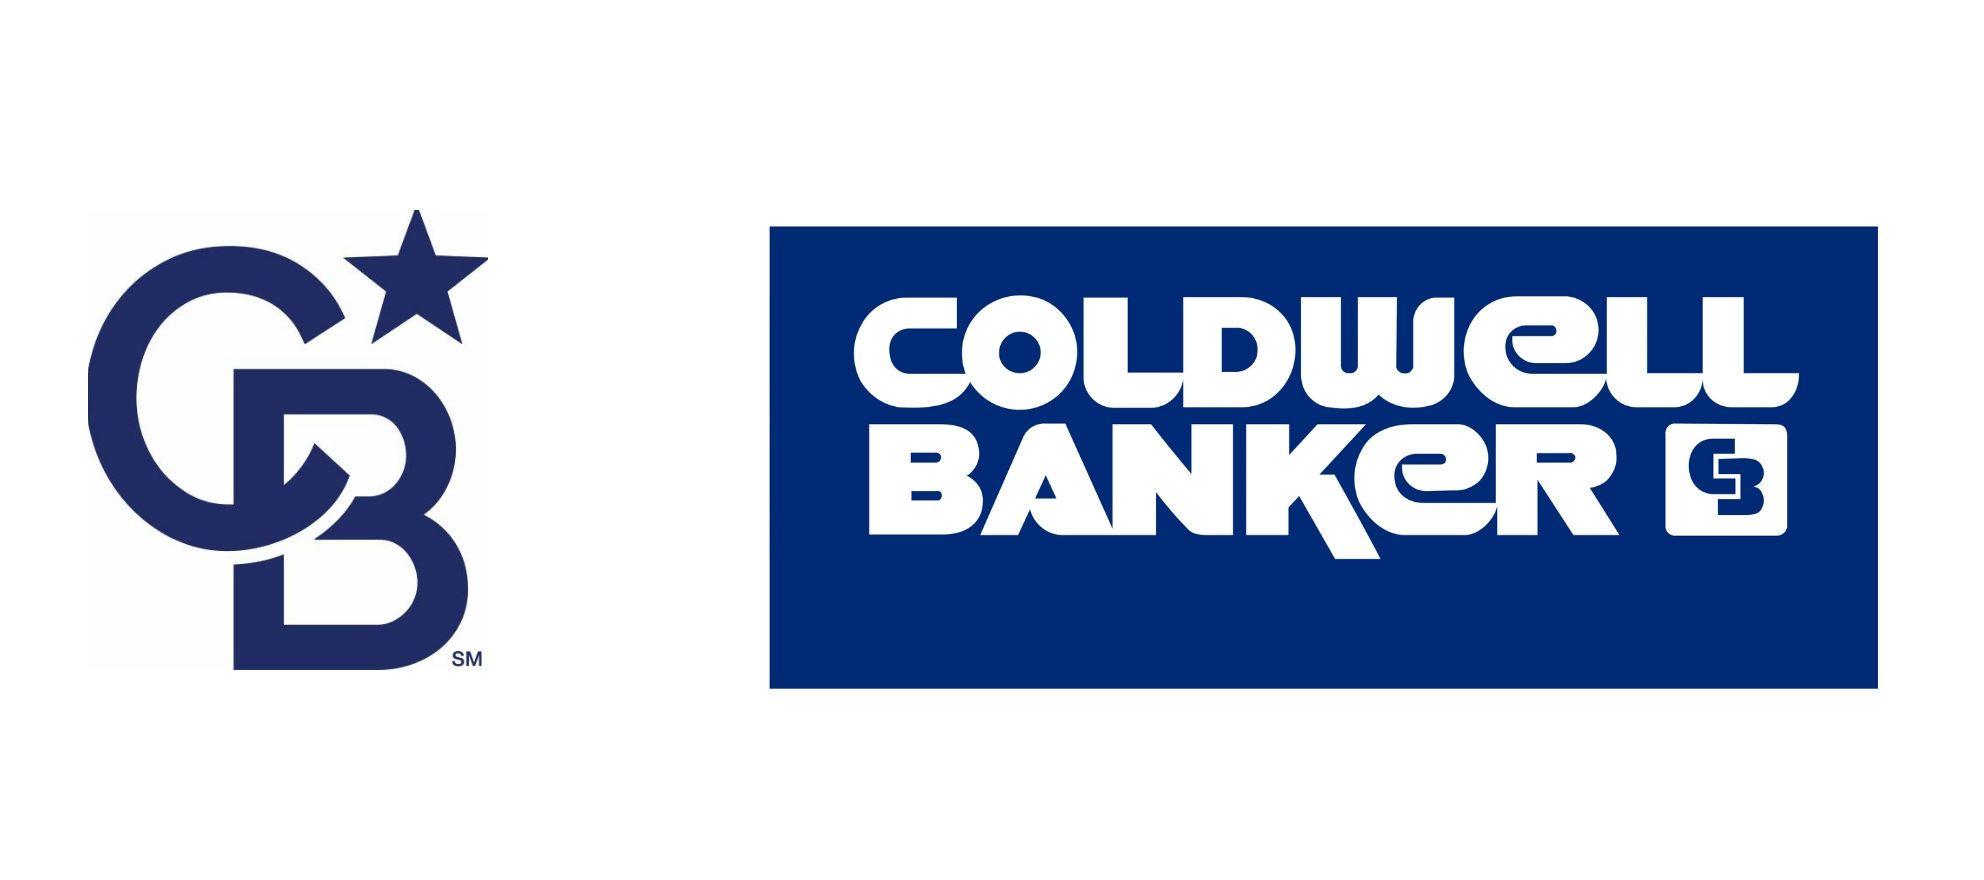 Effort Logo - Coldwell Banker Unveils New Logo, Ongoing Rebranding Effort